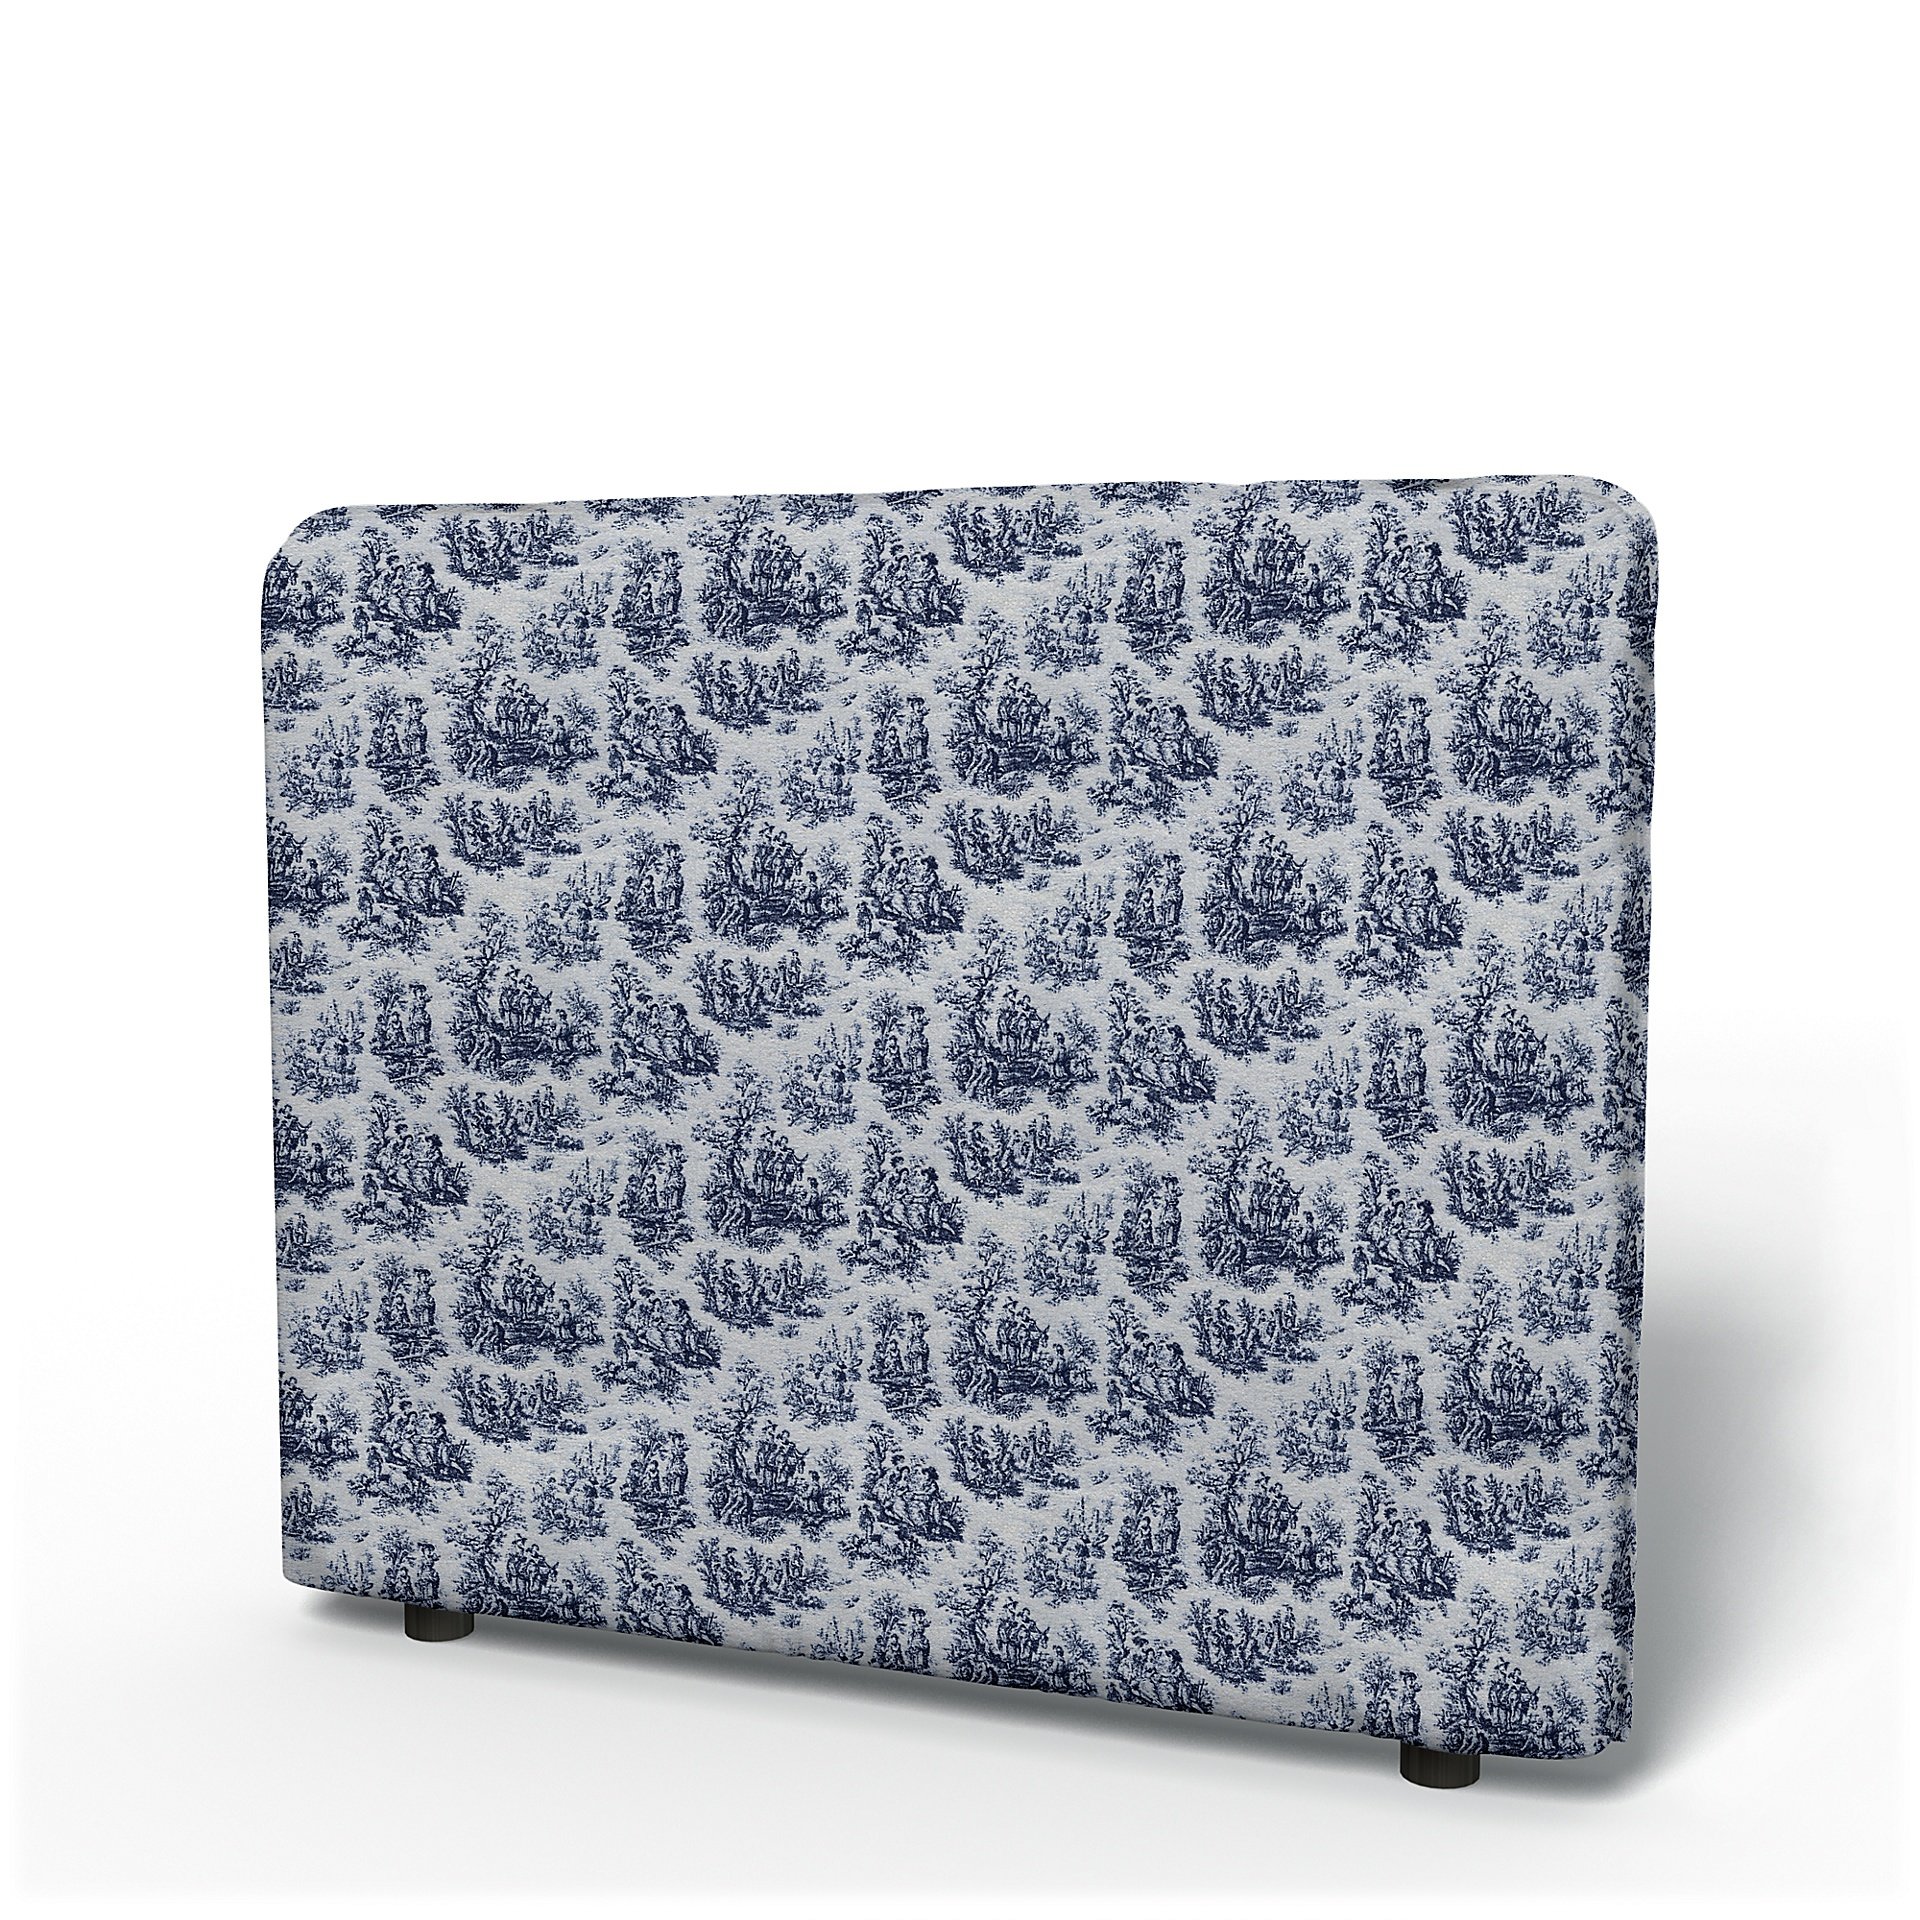 IKEA - Vallentuna Low Backrest Cover 100x80cm 39x32in, Dark Blue, Boucle & Texture - Bemz